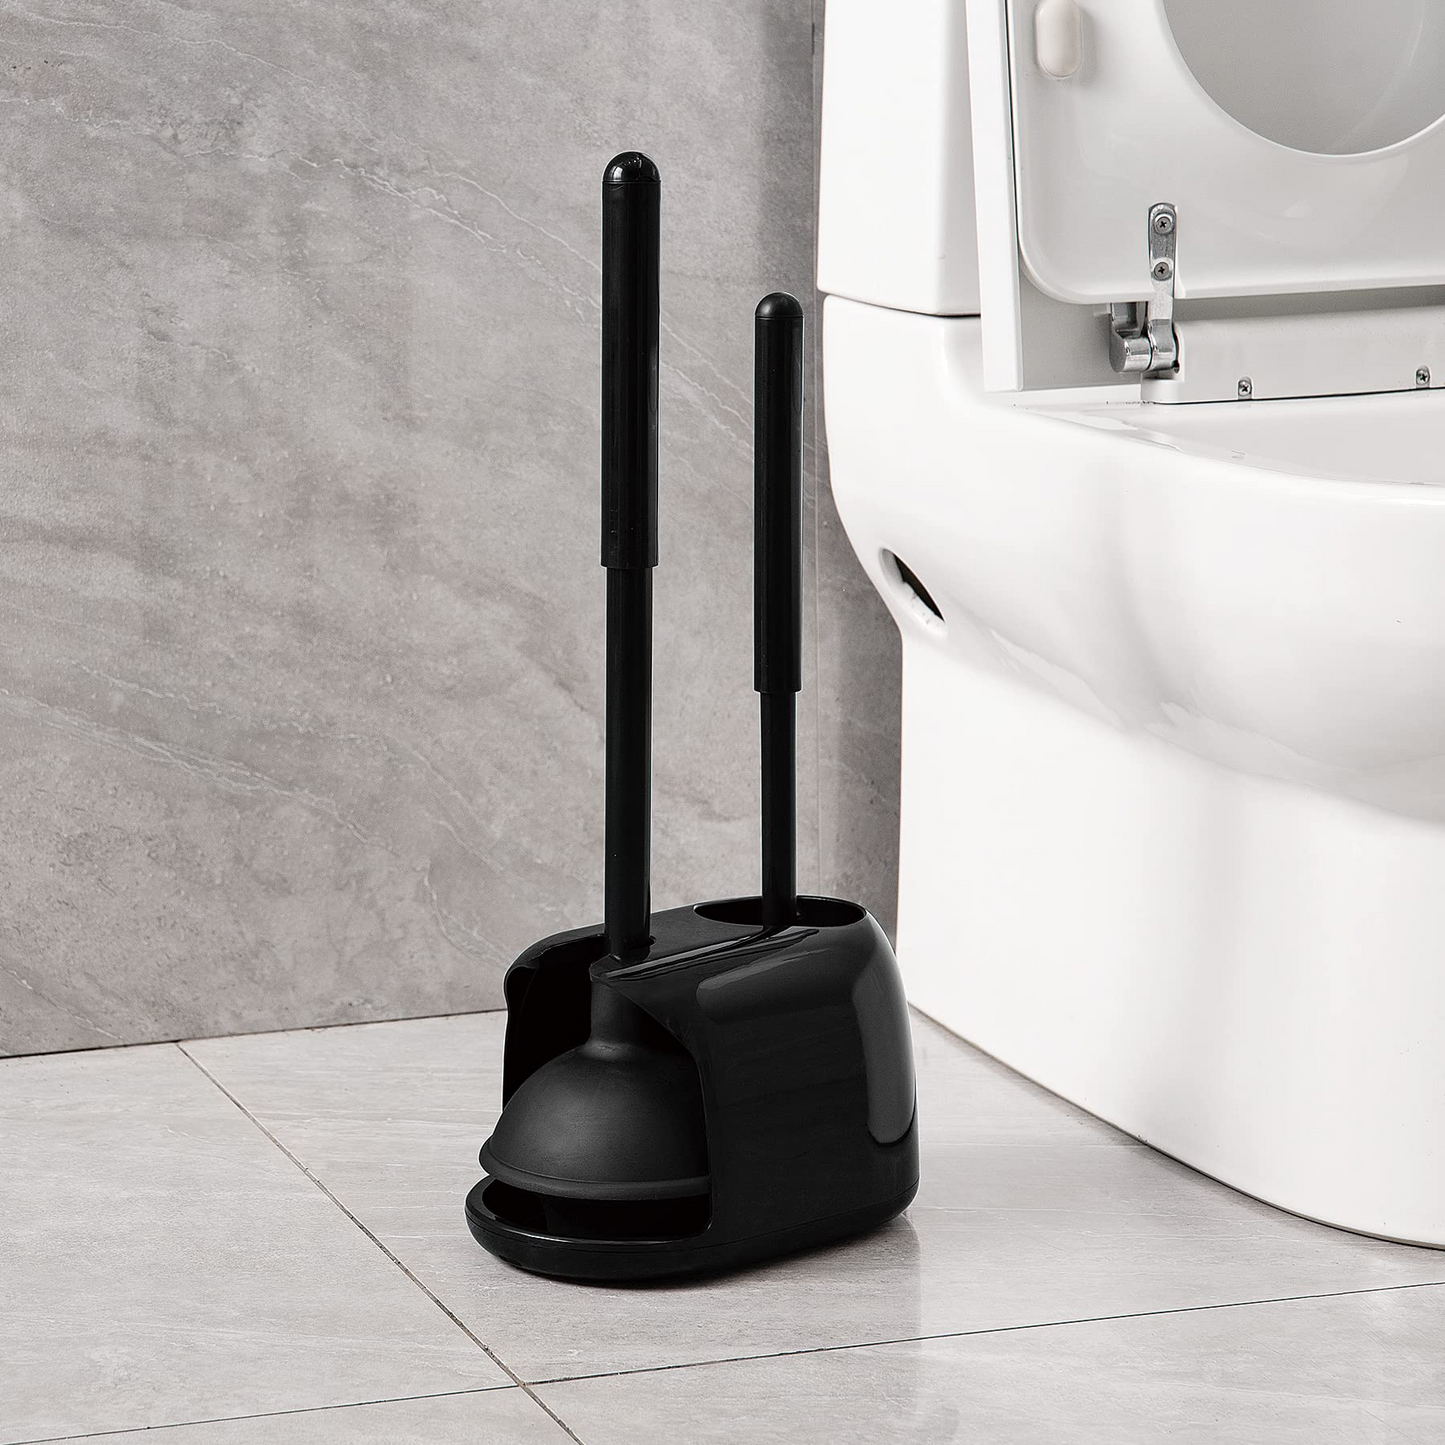 Black Plunger Toilet Cleaning Accessories Stainless Steel Toilet Bowl Brush  Set Toilet Plunger Set Toilet Brush Holder